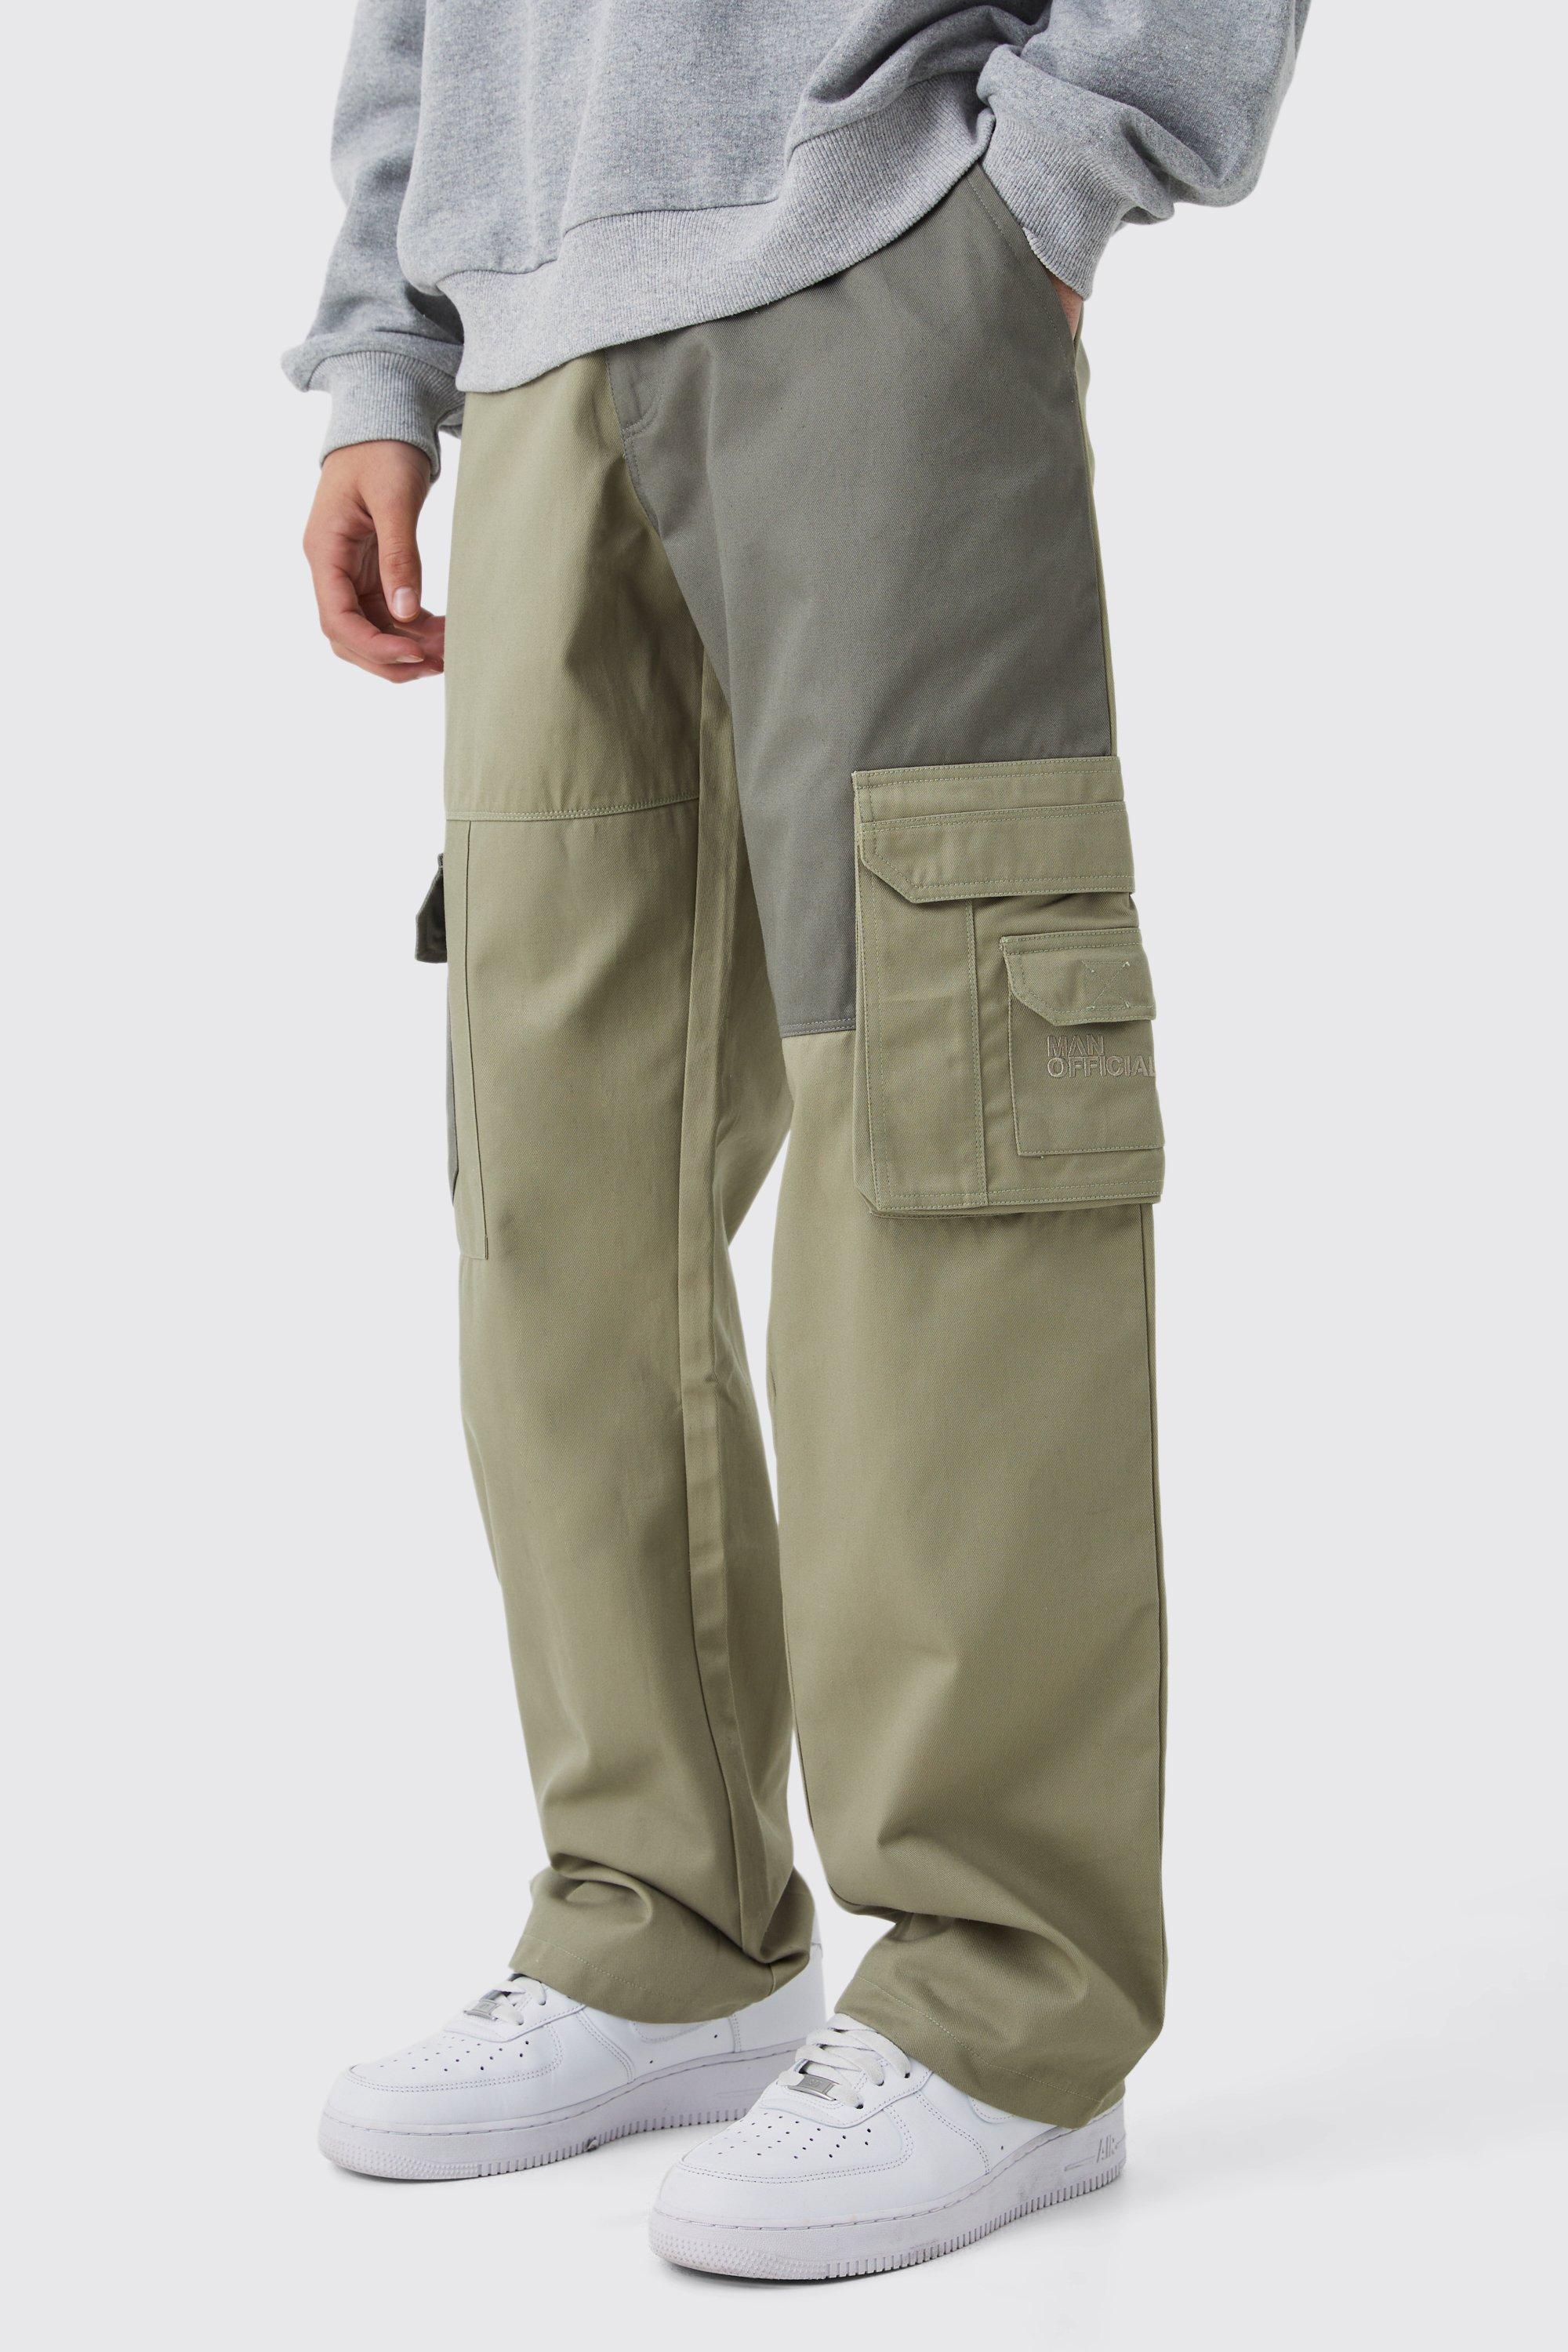 boohooMAN Tall Baggy Tie Dye Parachute Trouser - Men's Plain Trousers